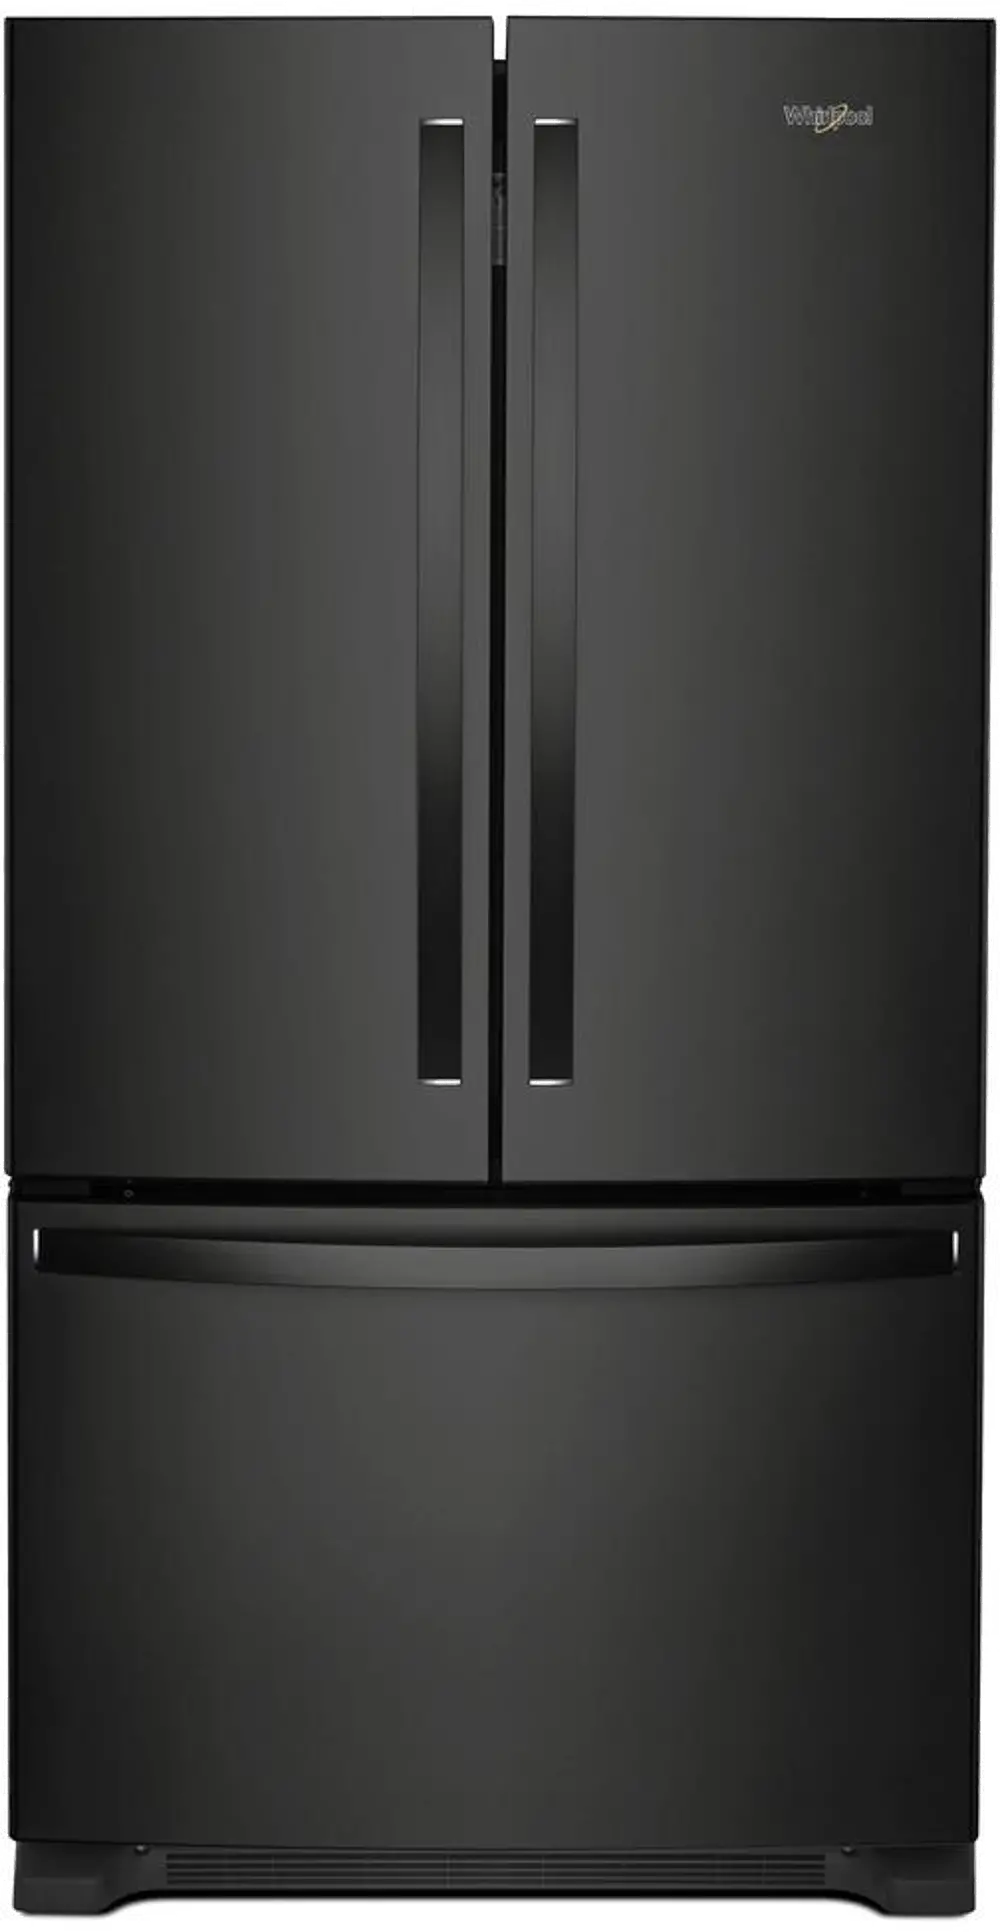 WRF535SWHB Whirlpool 25 cu ft French Door Refrigerator - Black-1